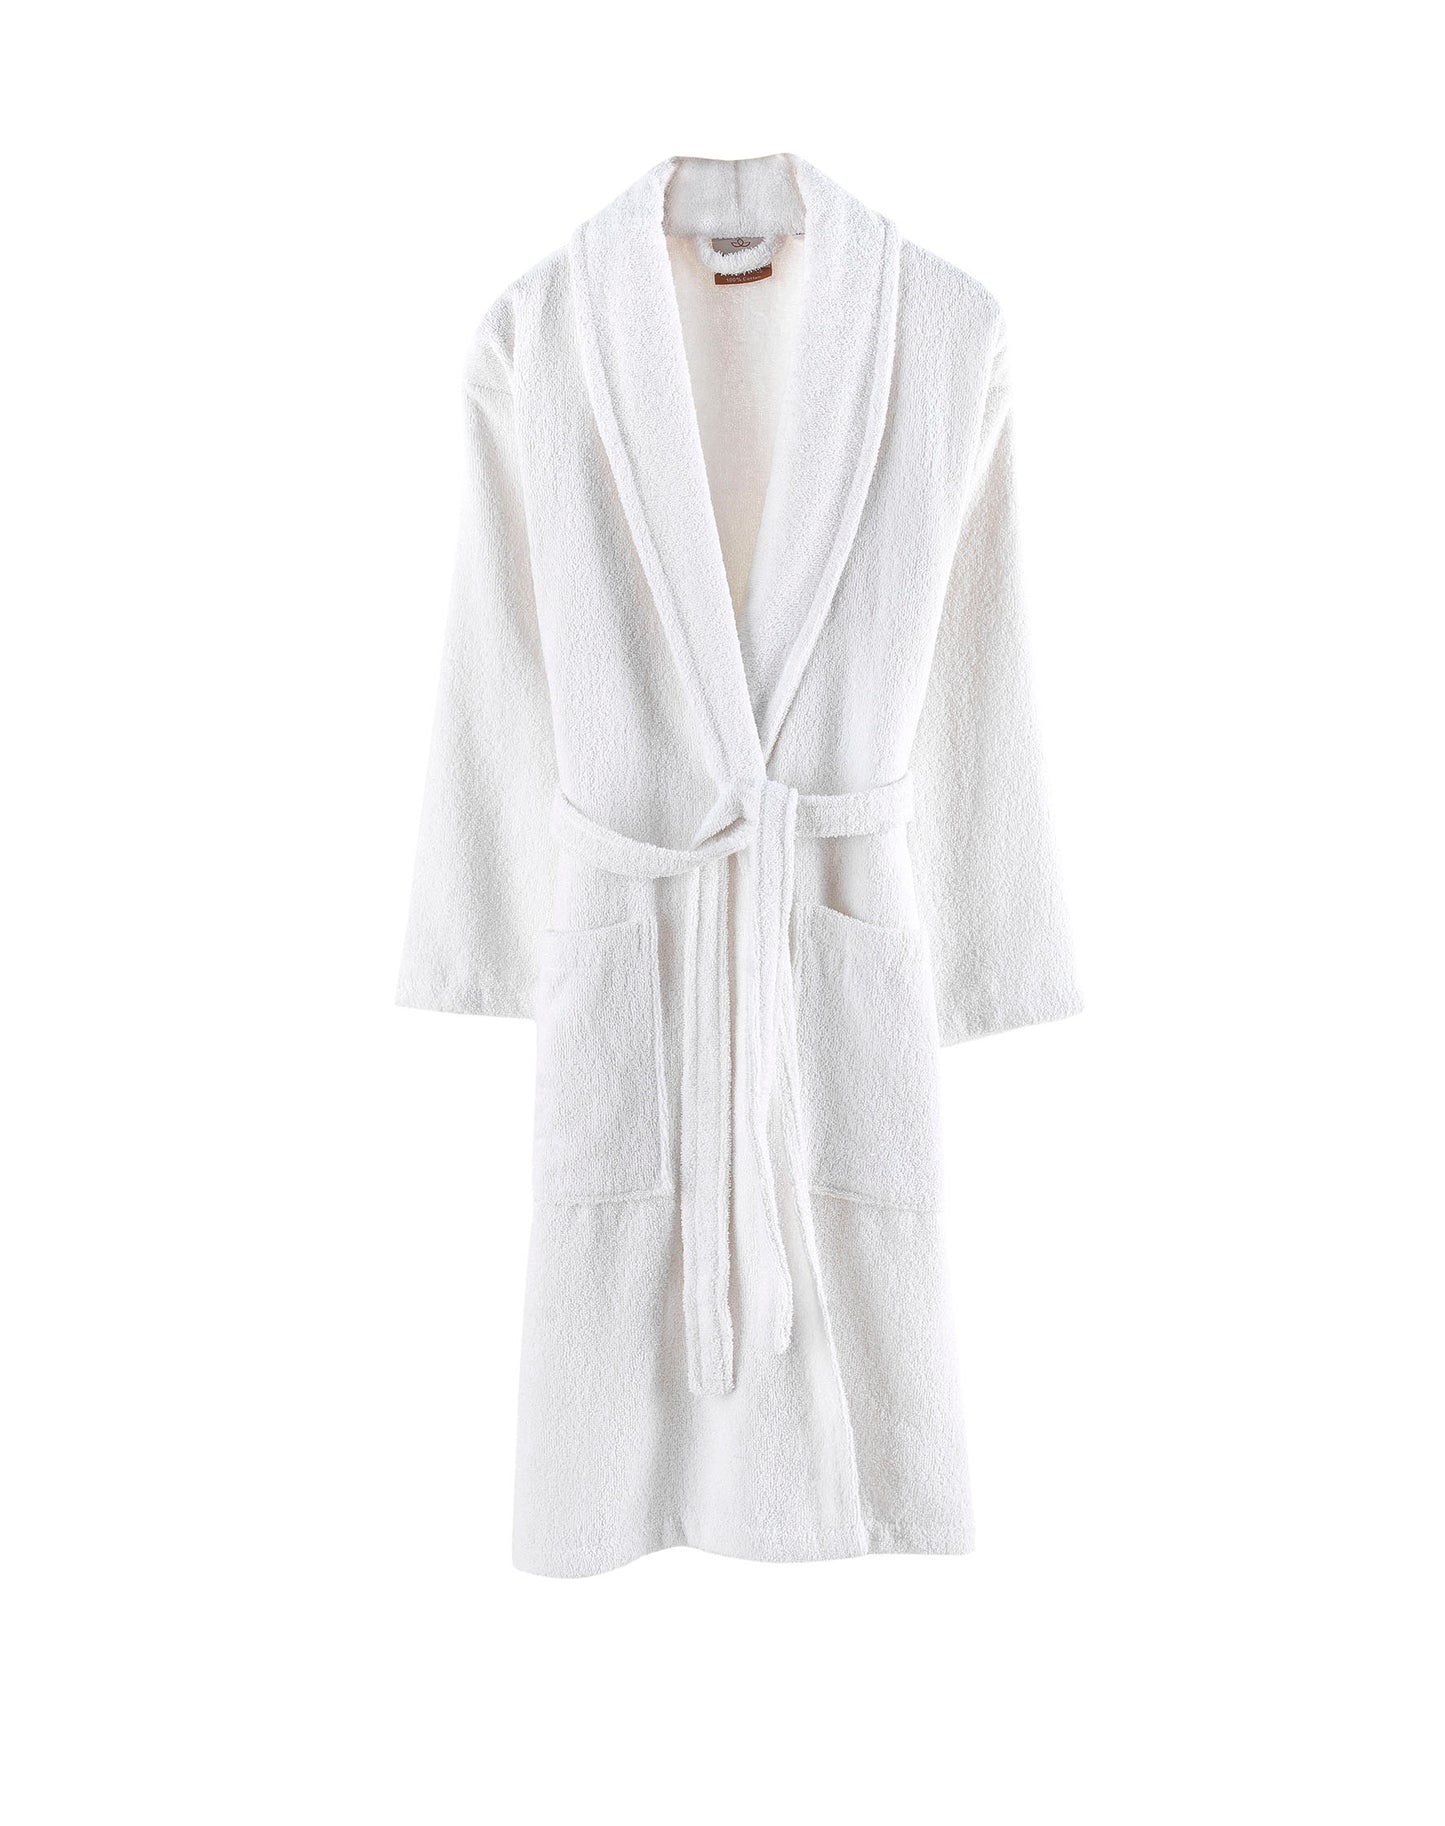 Halley Luxury Bathrobe for Women & Men, Shawl Collar Spa Bath Robes Terry Cotton Ultra Soft Shower Robe with Pockets White (M)